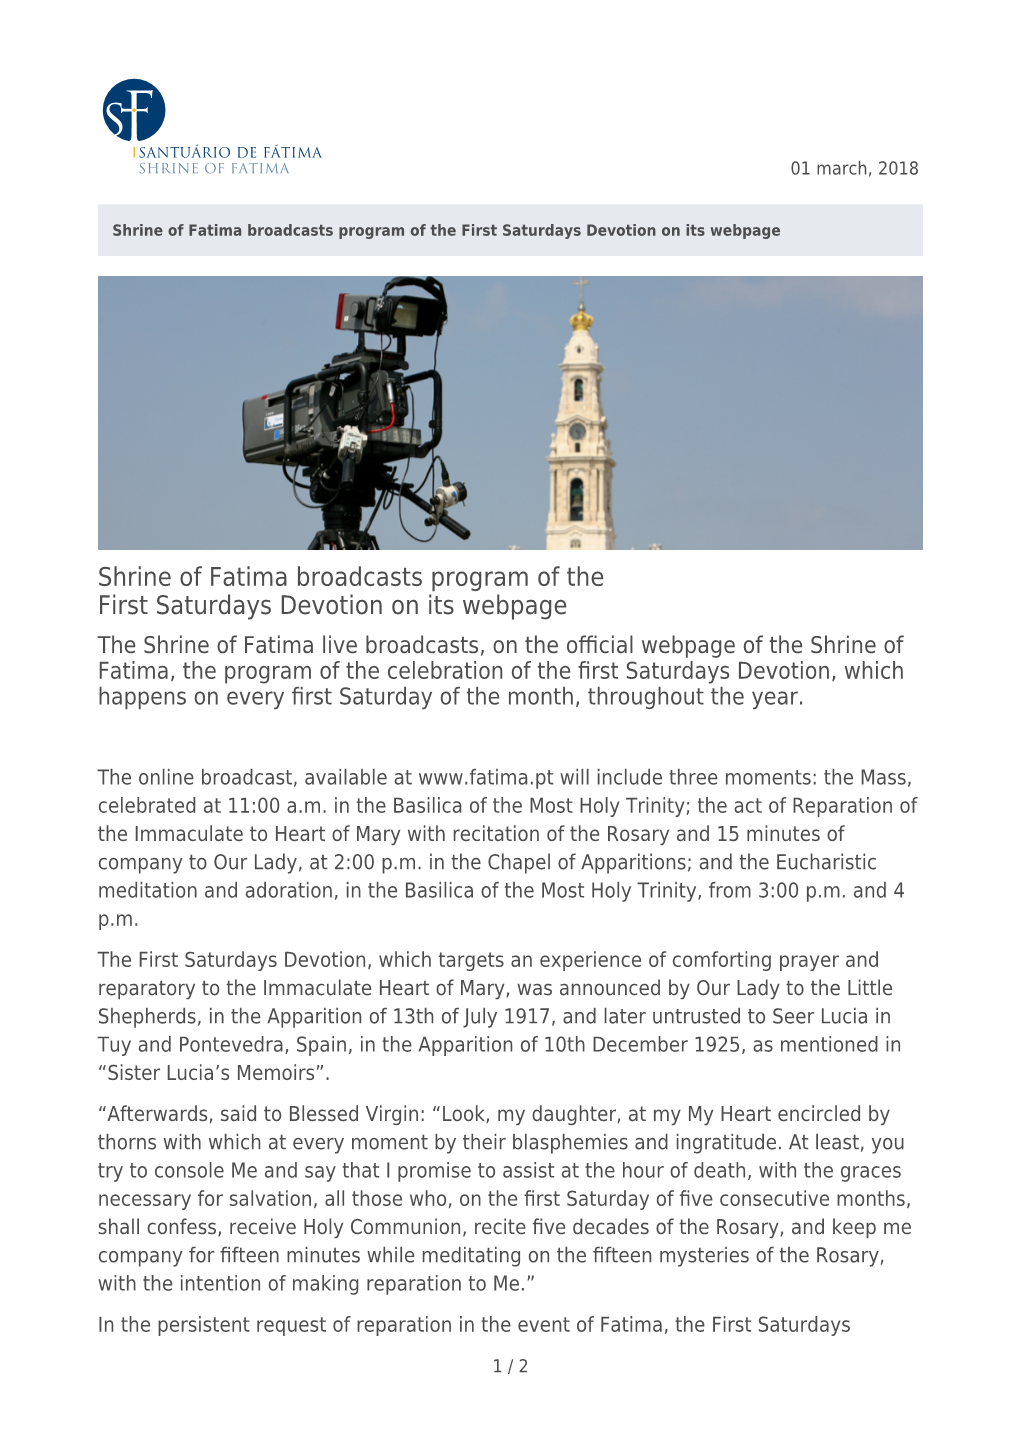 Shrine of Fatima Broadcasts Program of the First Saturdays Devotion on Its Webpage